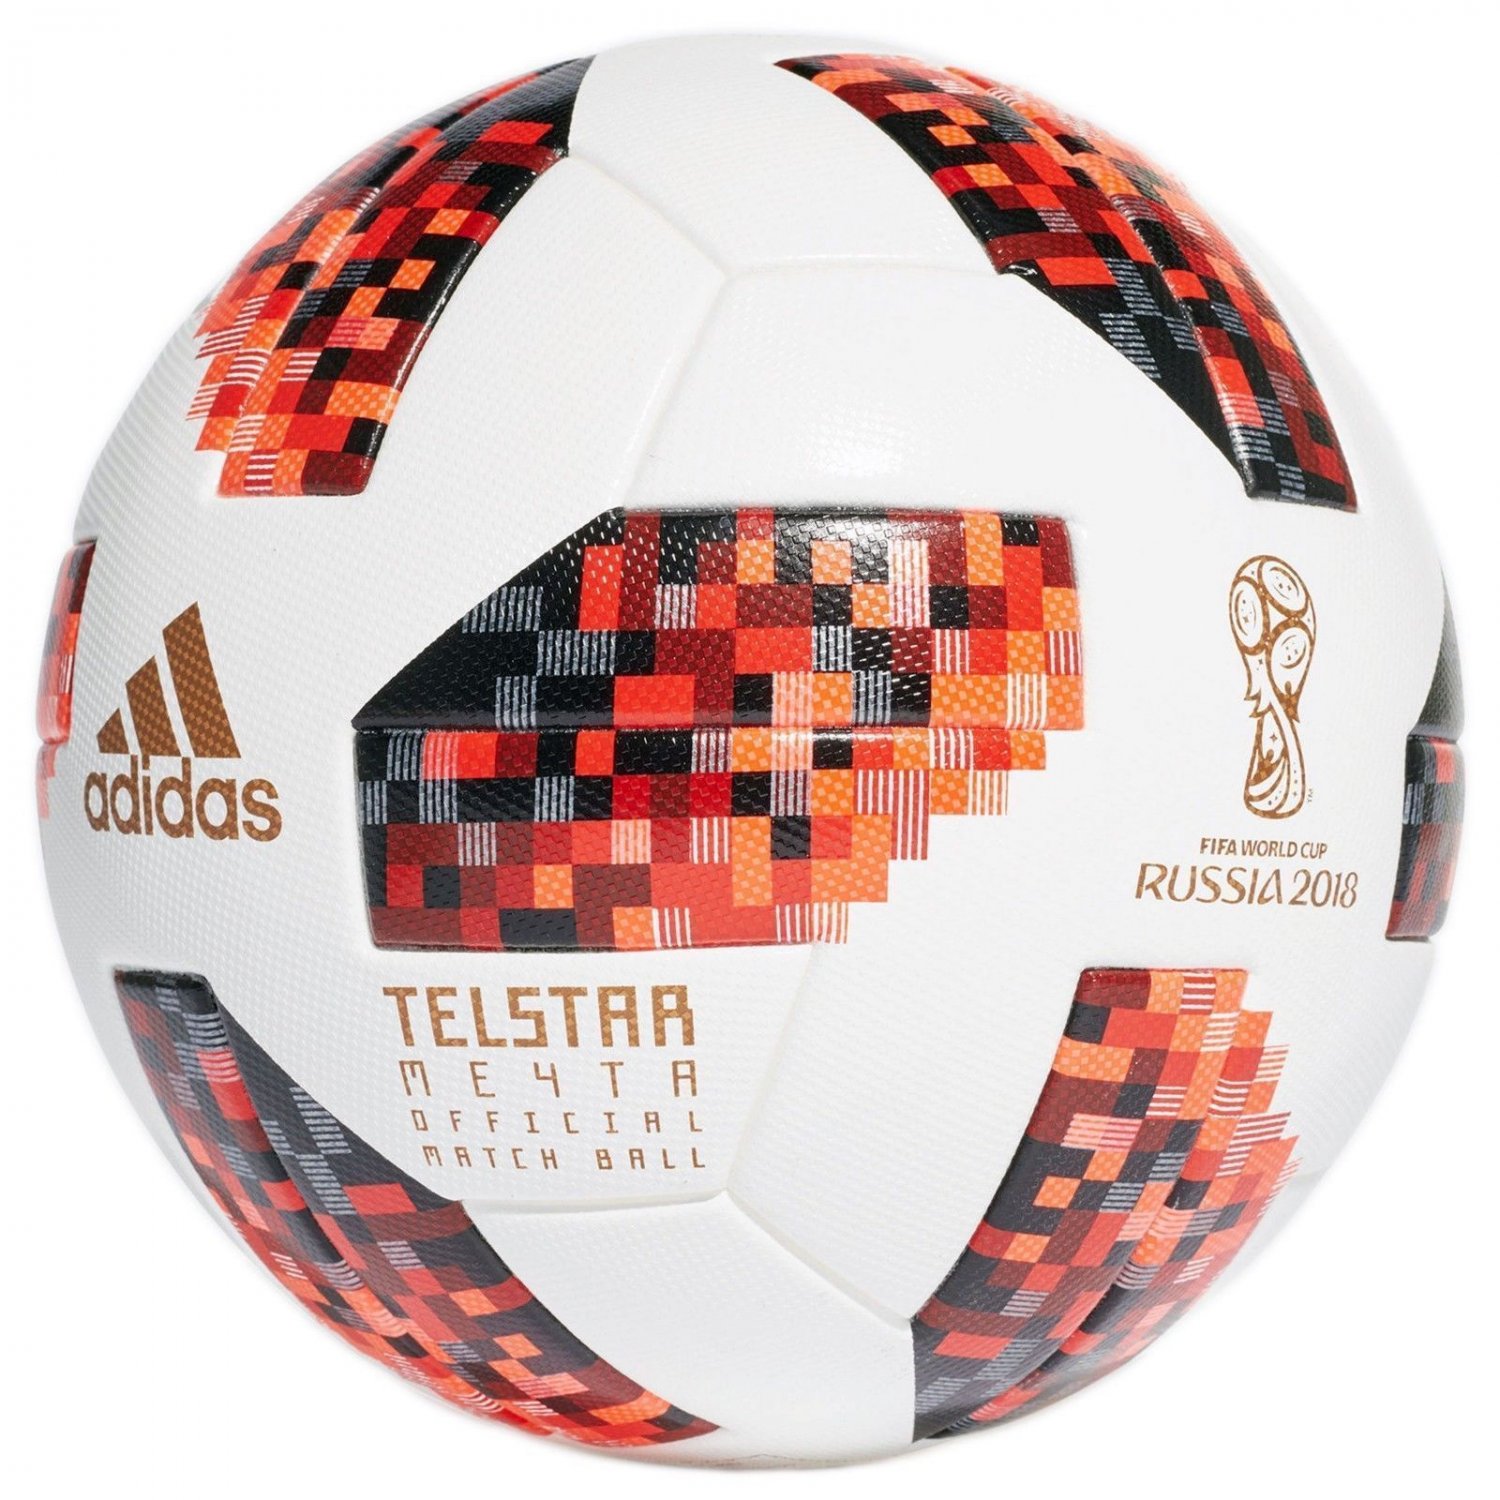 Adidas Telstar 18 Fifa World Cup 2018 Russia Official